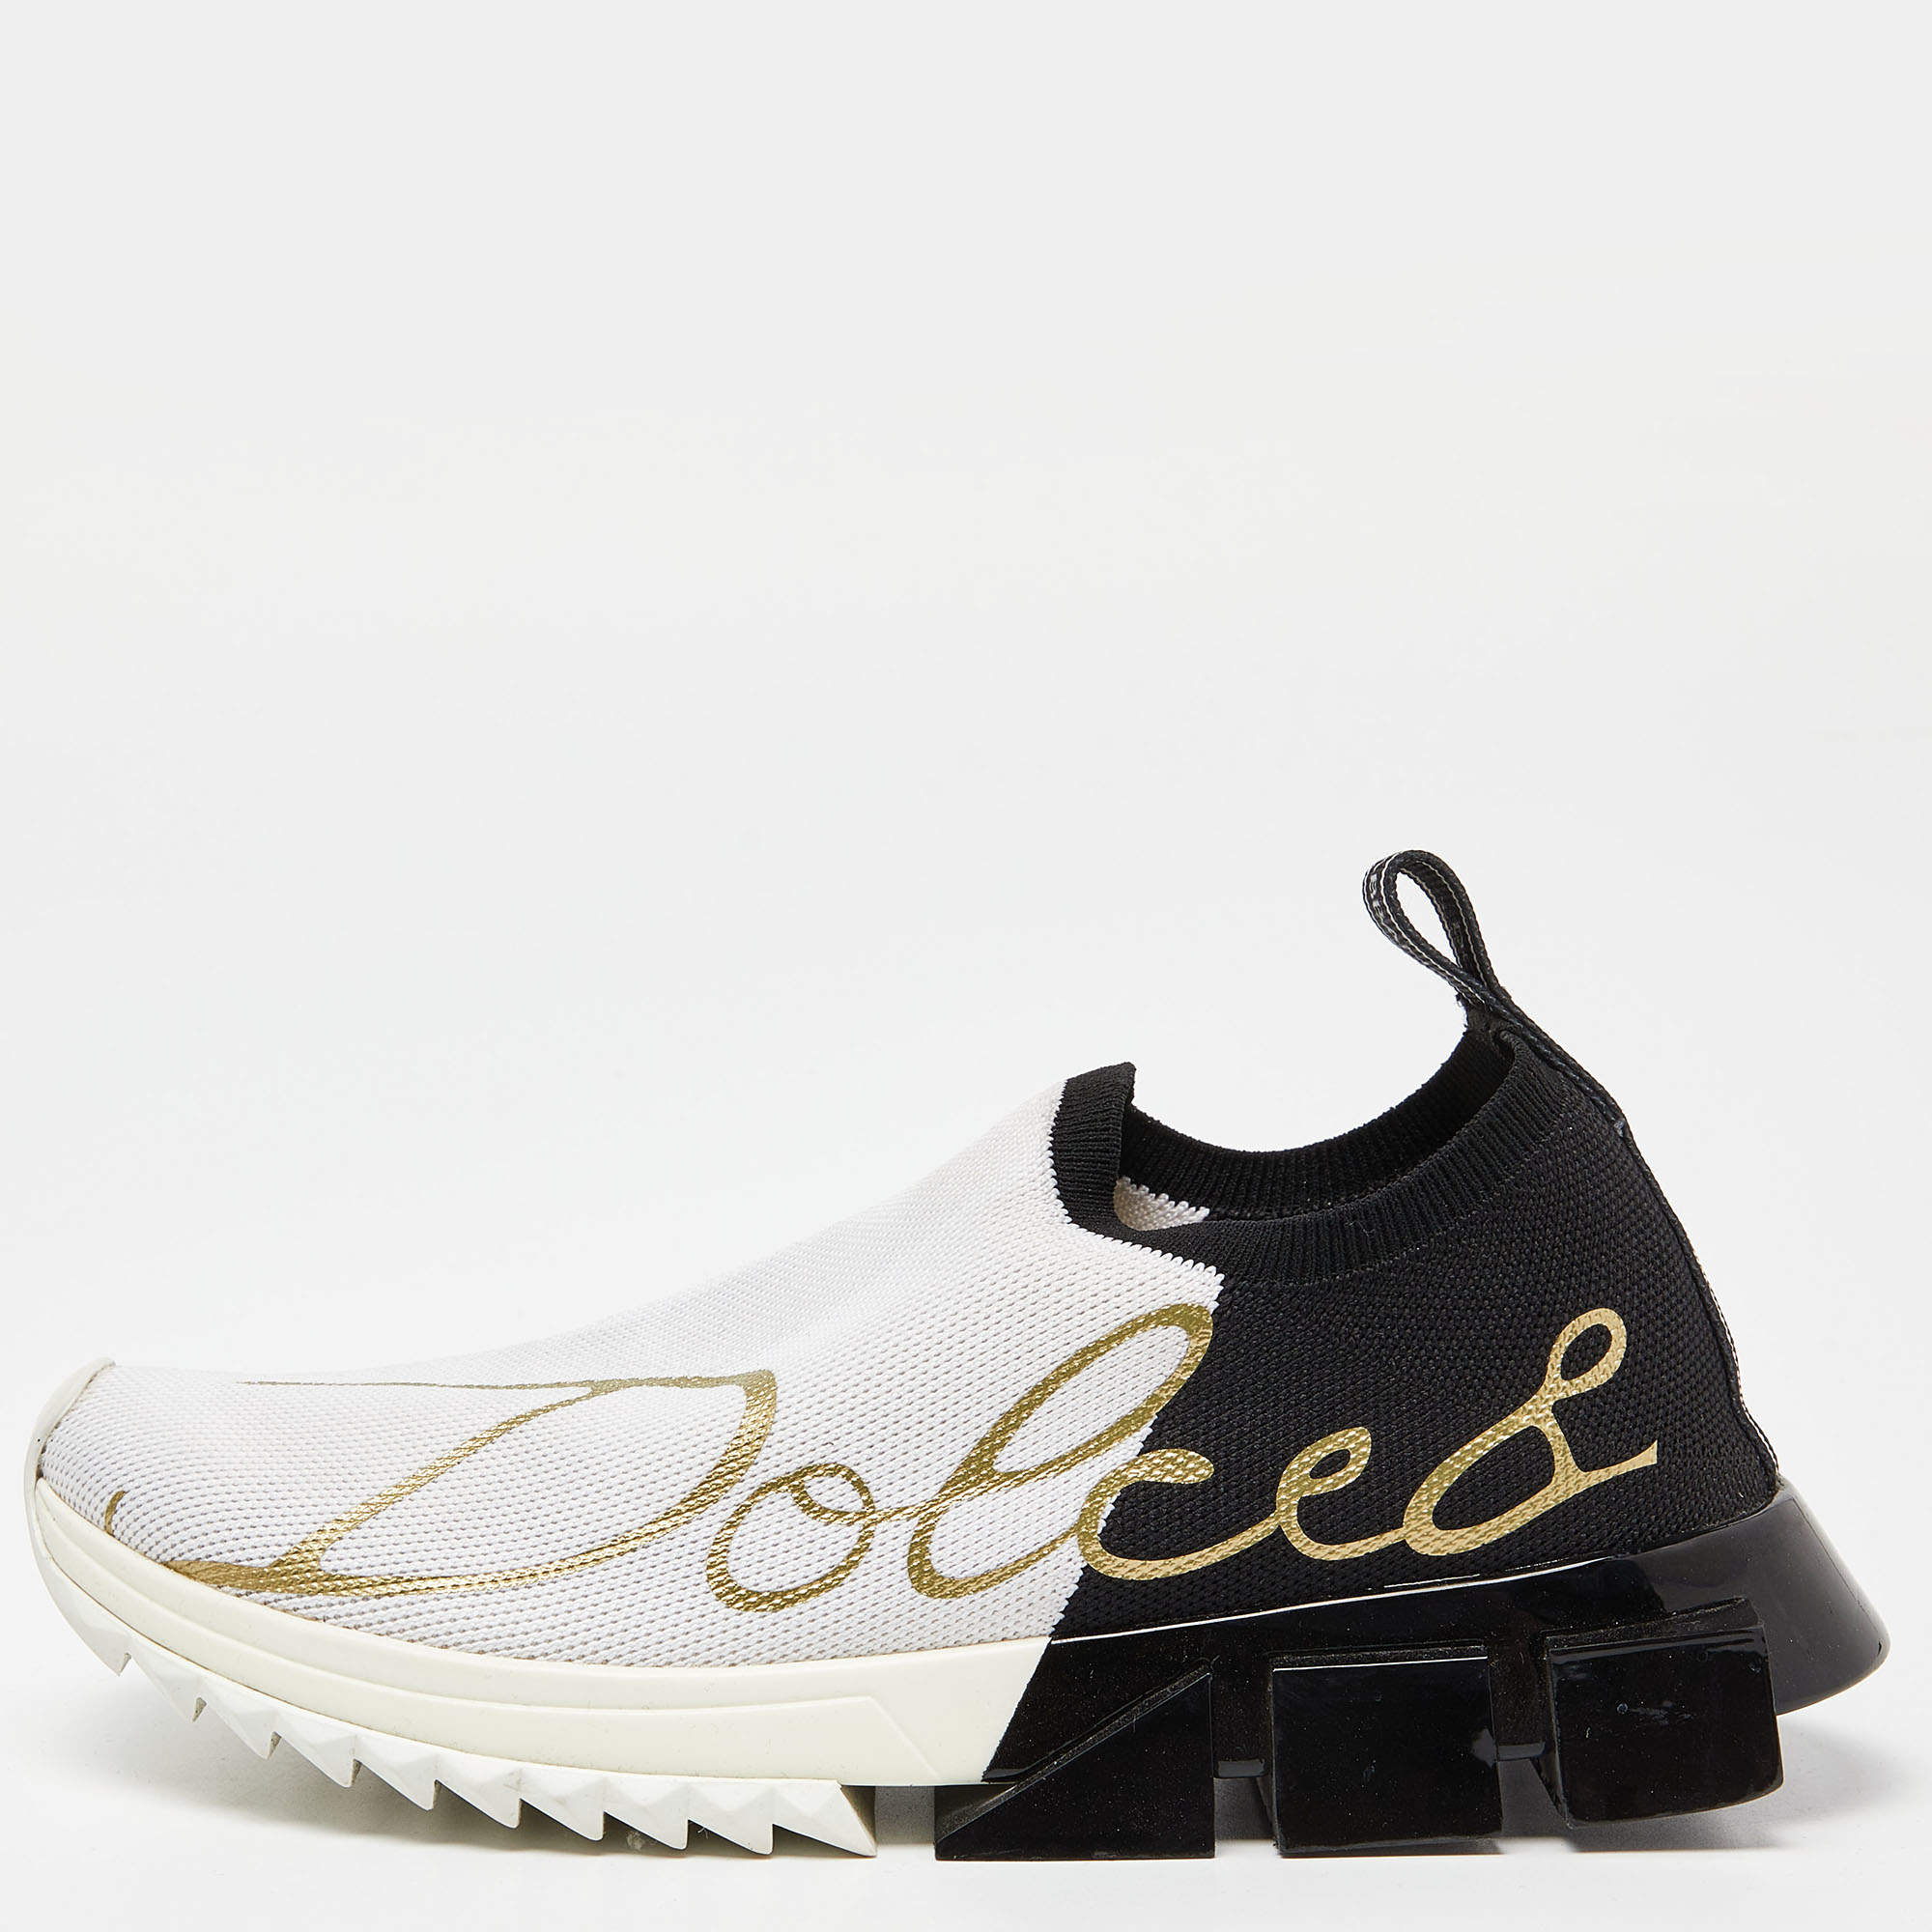 Dolce & Gabbana White/Black Knit Fabric Sorrento Slip-On Sneakers Size 36